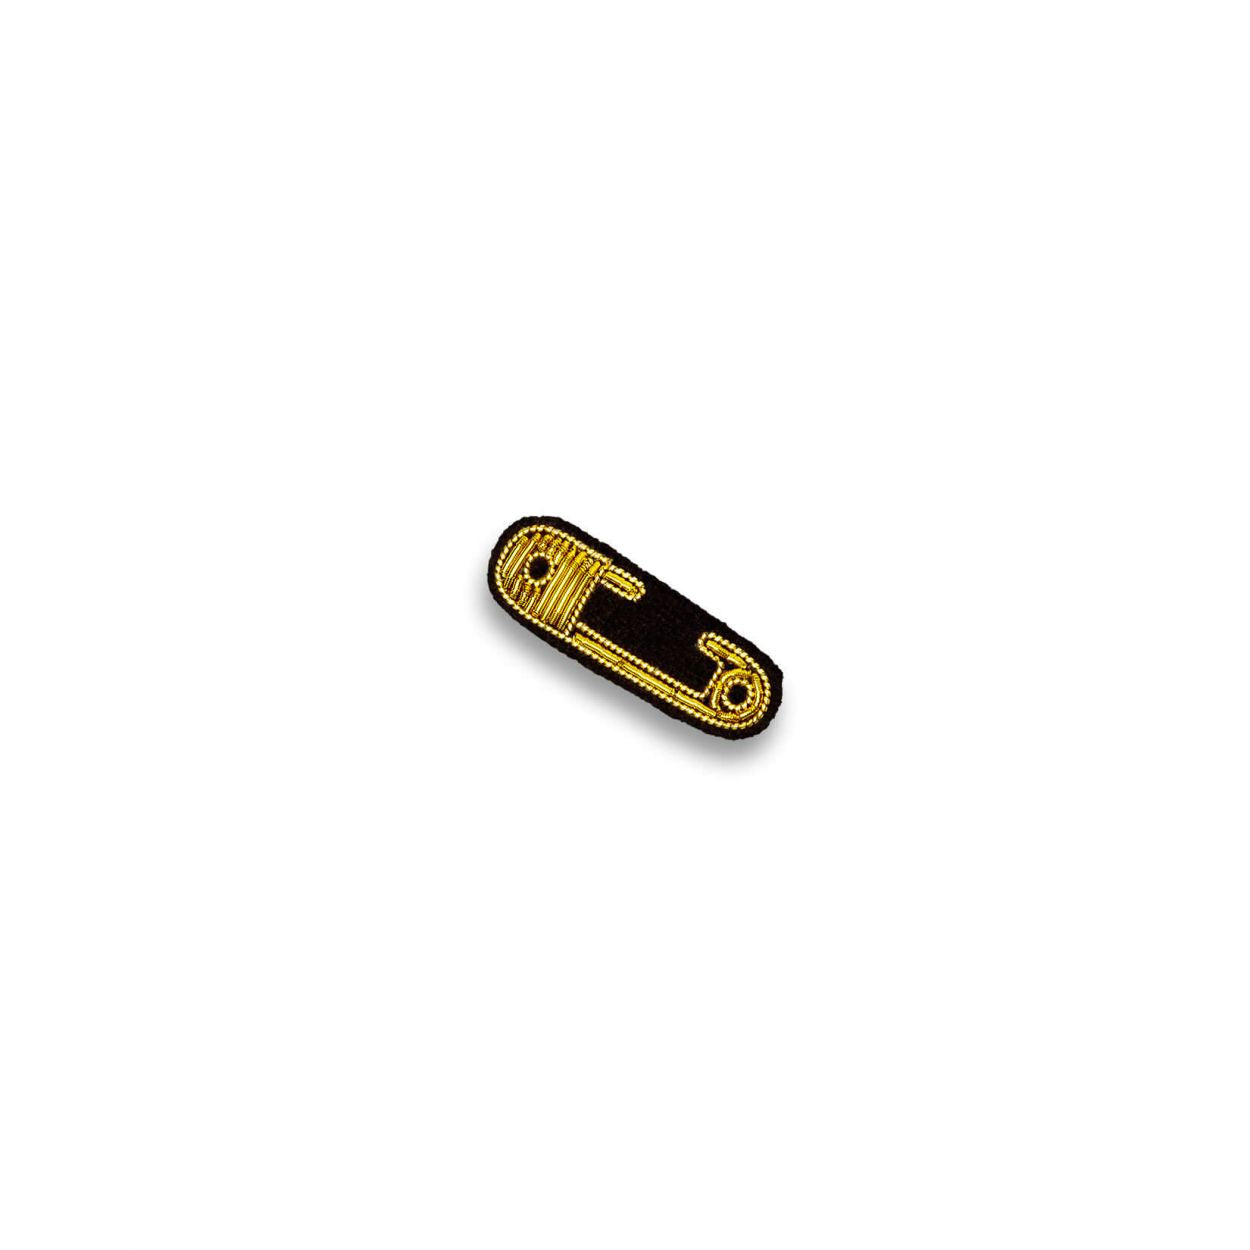 Spilla safety pin Macon & Lesquoy